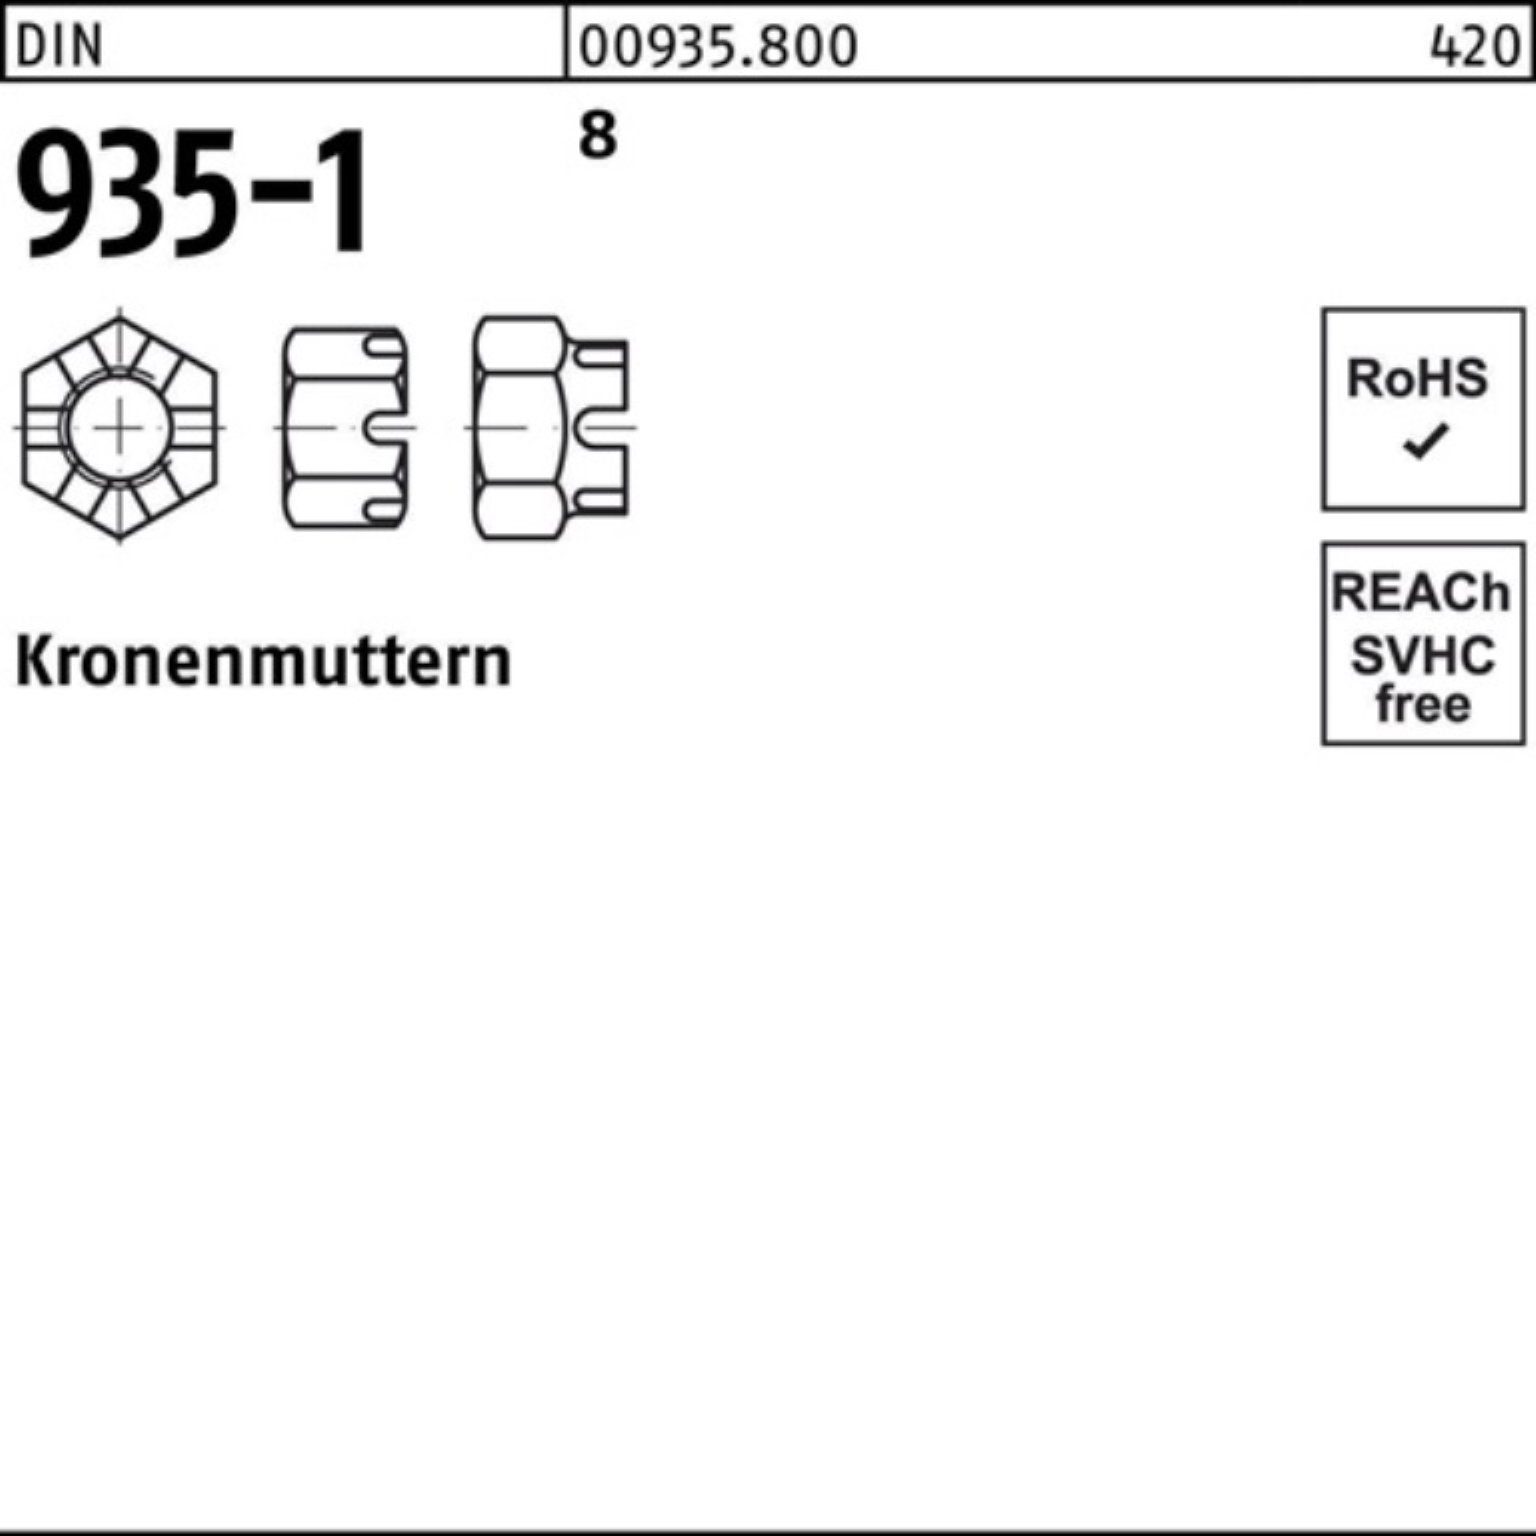 Stück 100er Kronenmutter 935-1 8 935-1 8 DIN Kronenmutter Kronenmu DIN 25 Pack Reyher M24